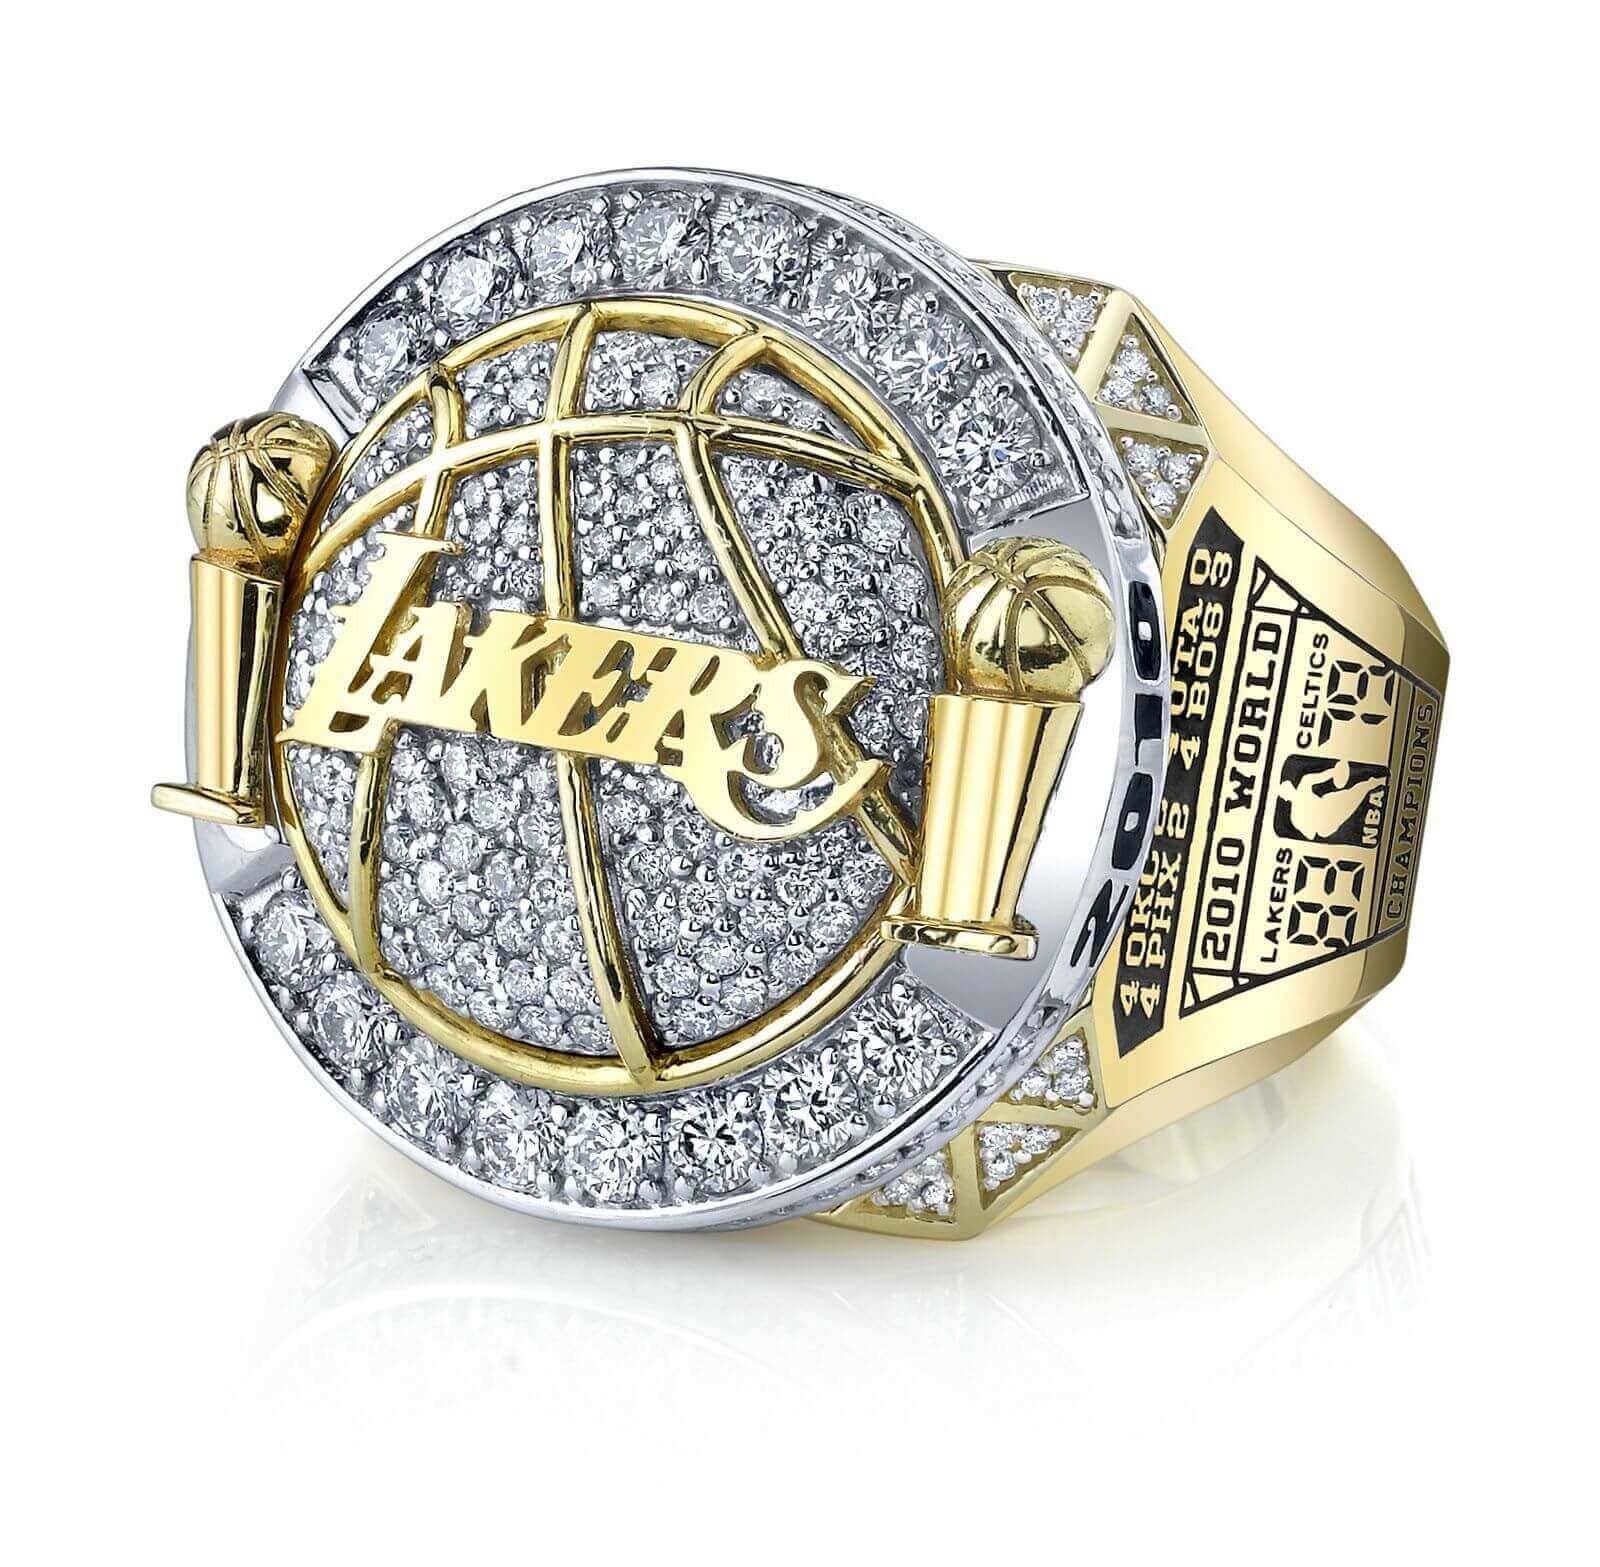 NBA -  Gold Lakers championship rings - Kobe Bryant